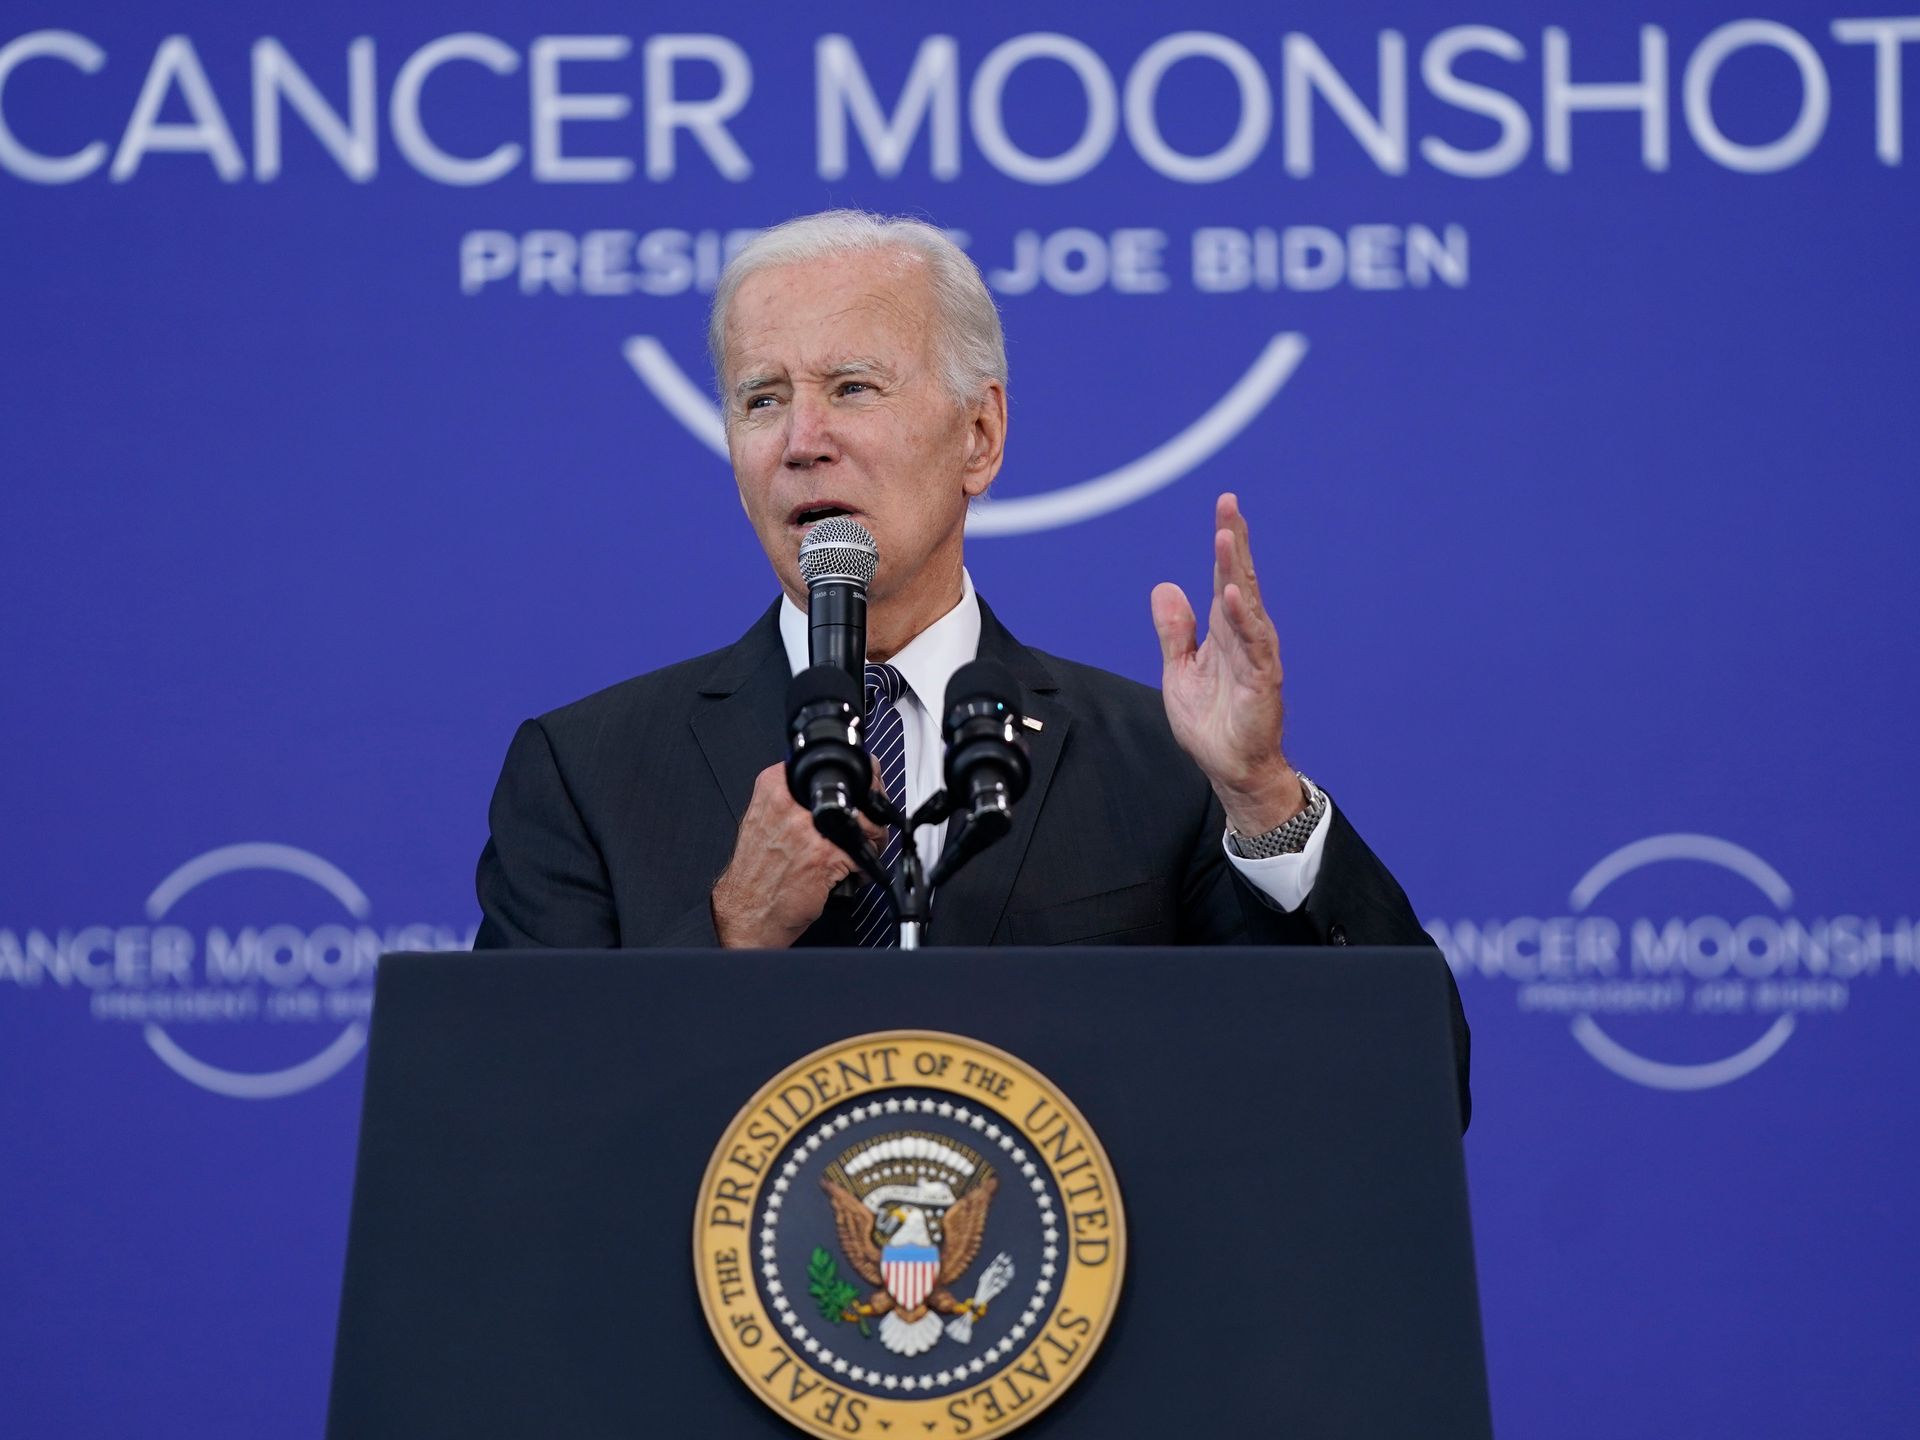 President Joe Biden presenting his Cancer Moonshot